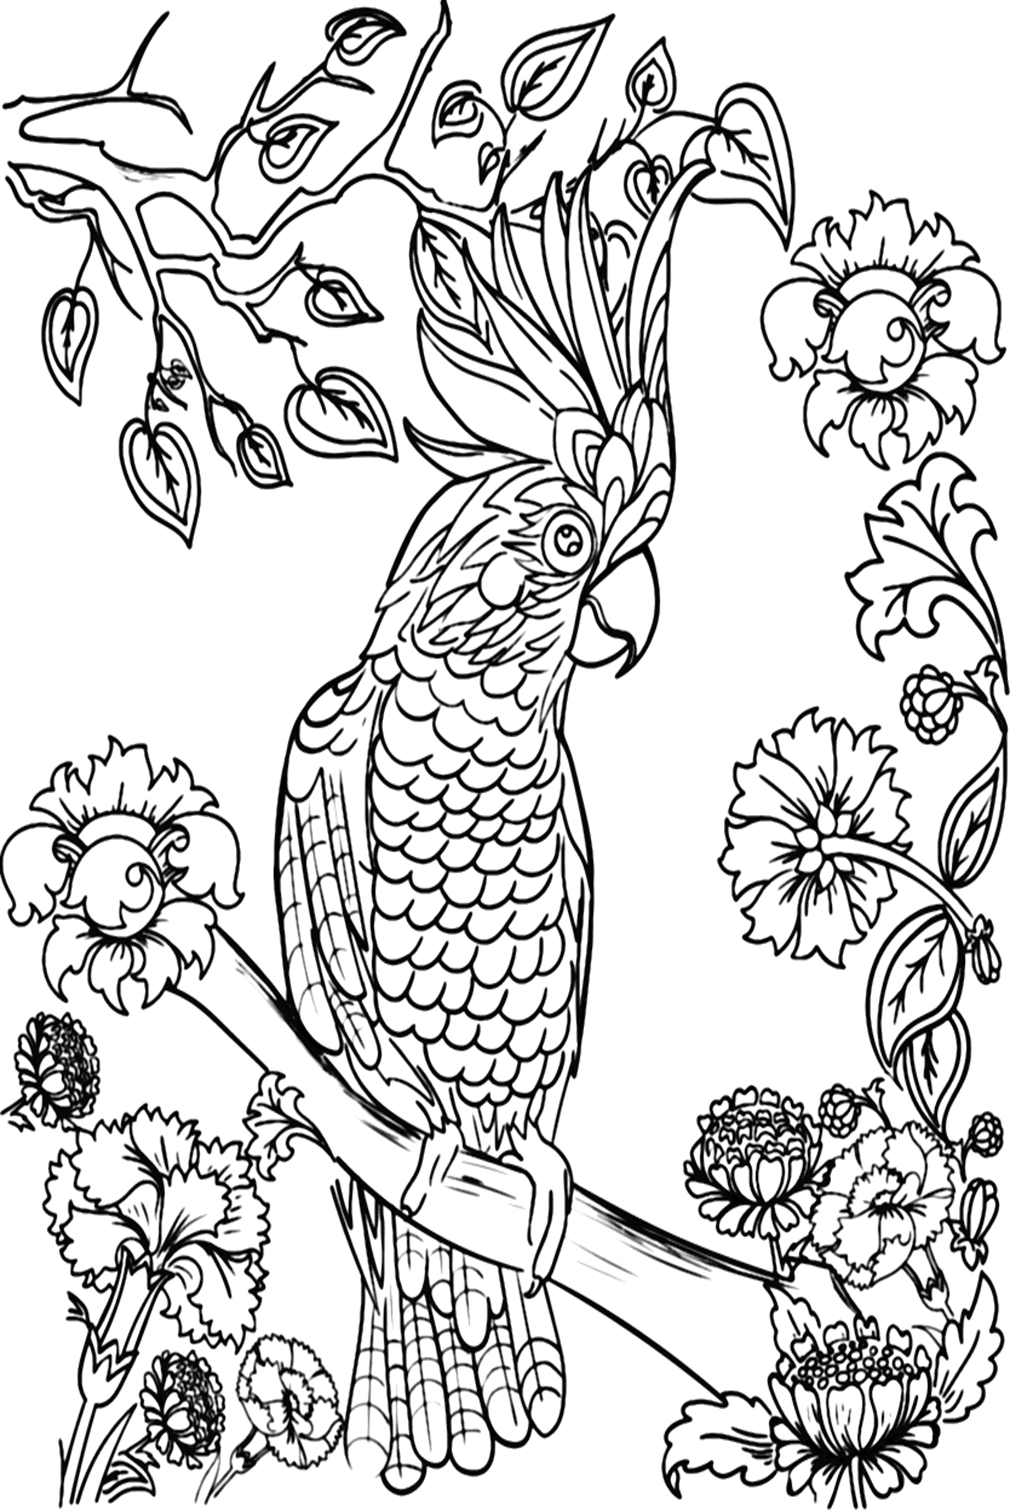 Cockatiel Image To Color - Free Printable Coloring Pages